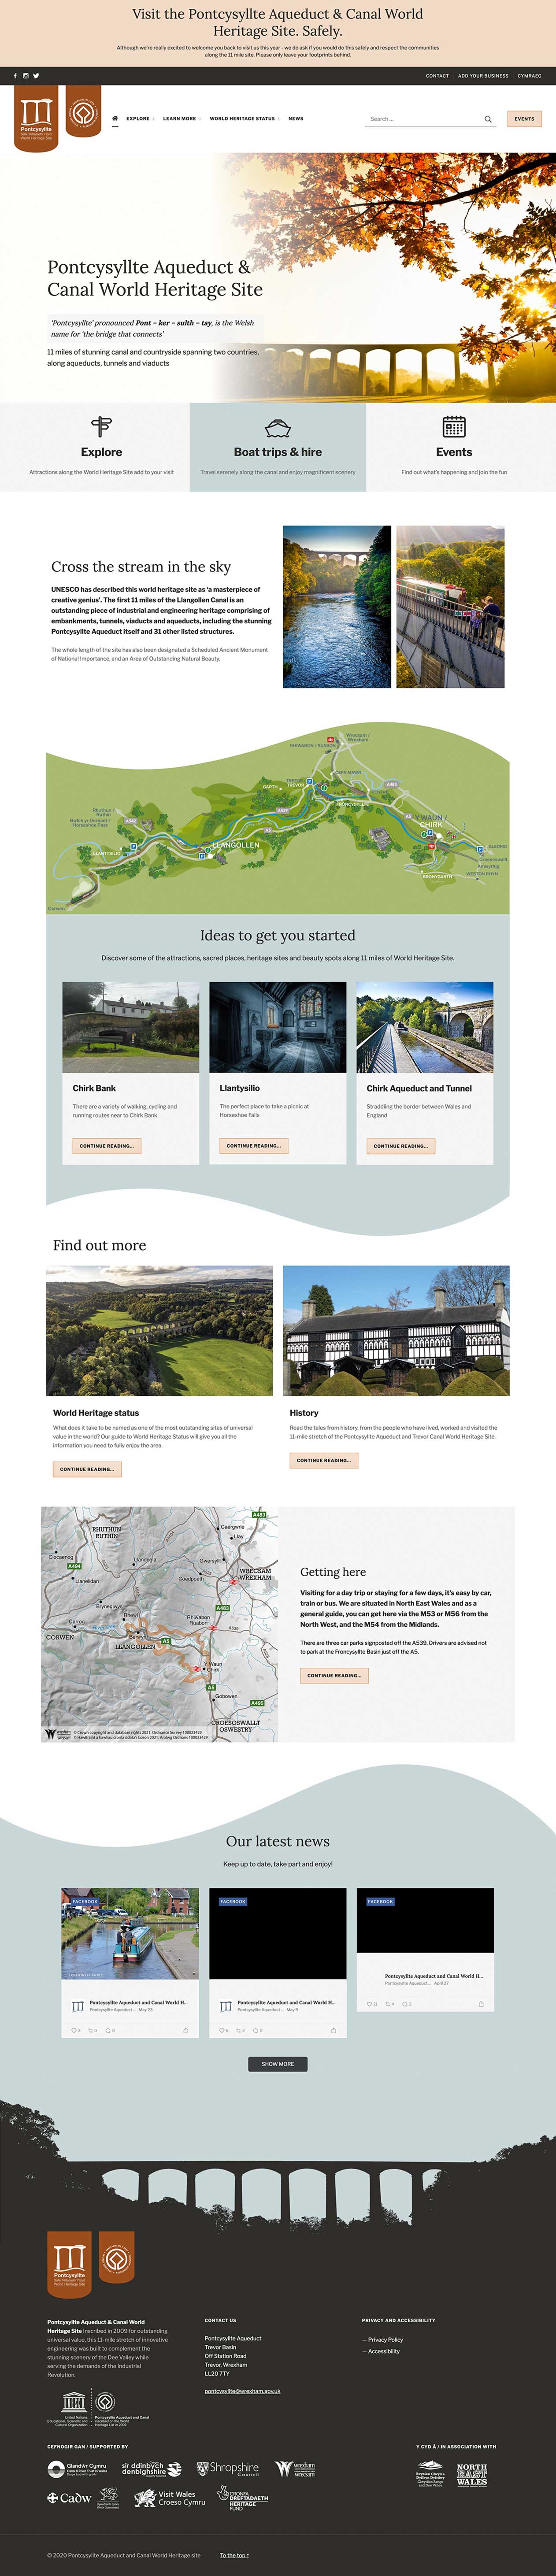 Pontcysyllte Aqueduct & Canal World Heritage Site homepage